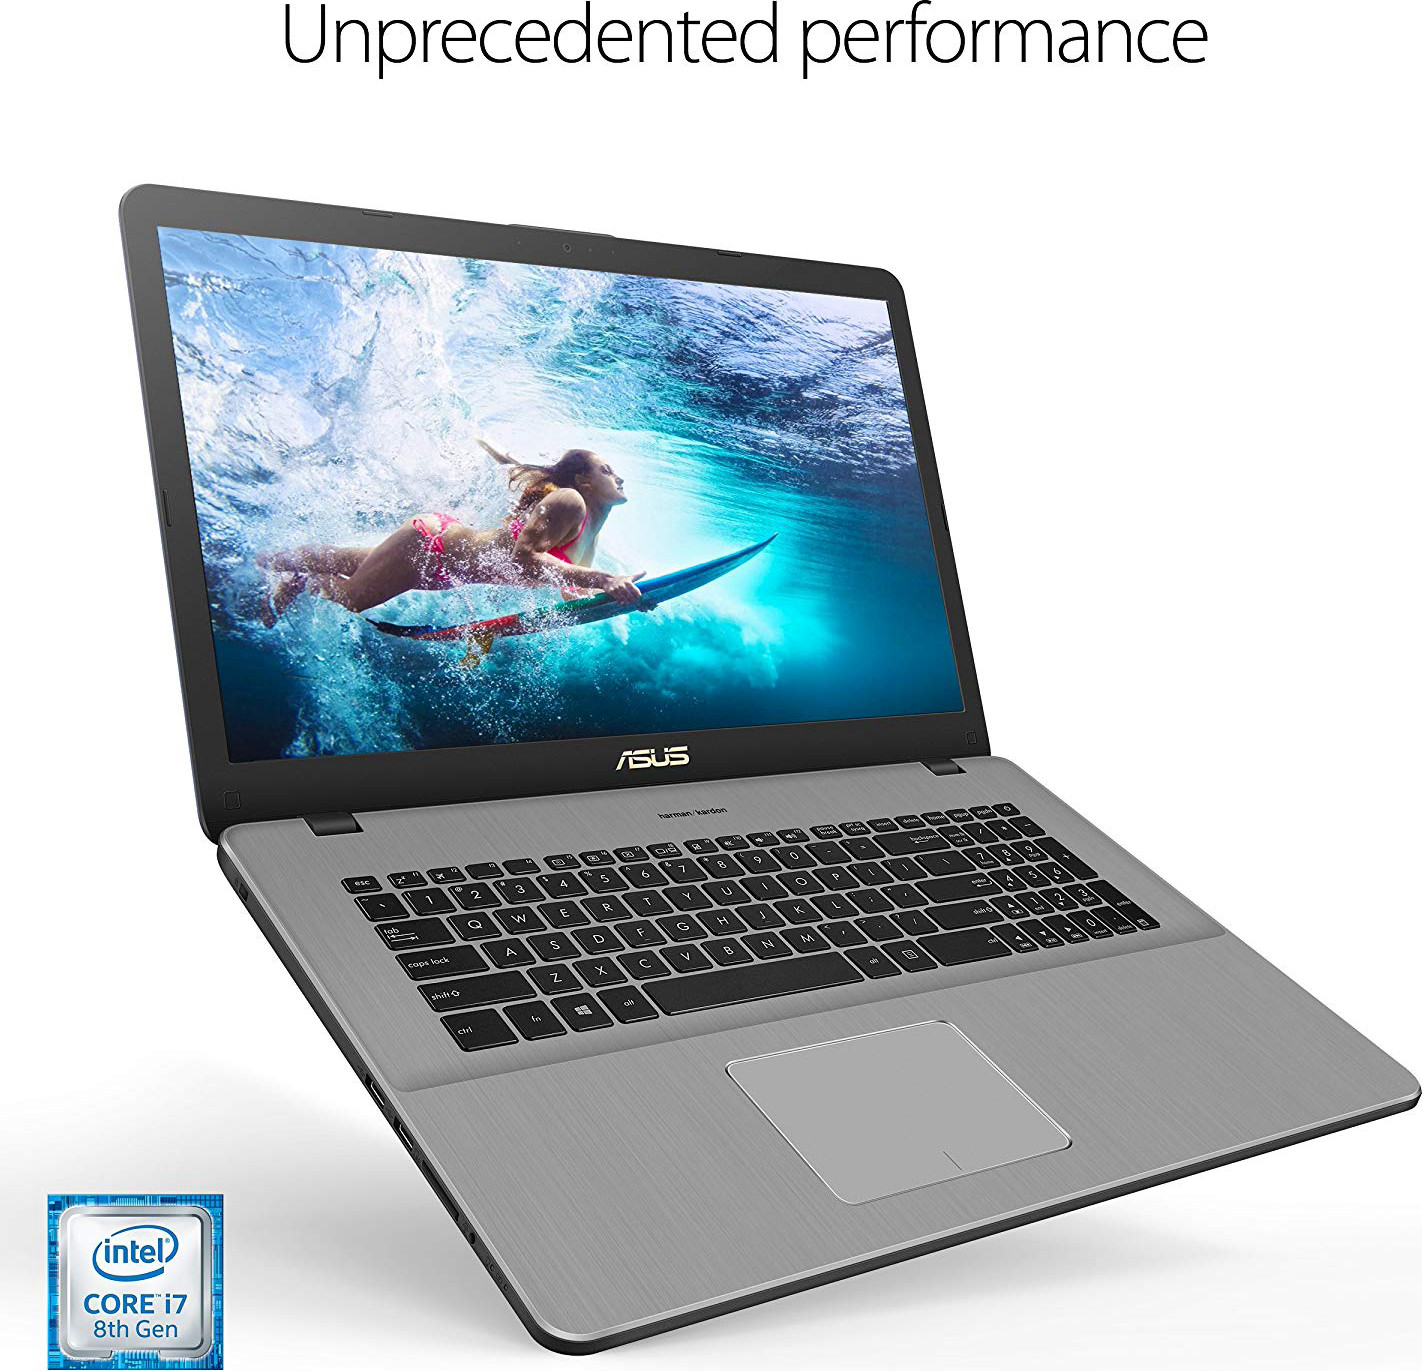 ASUS VivoBook Pro Thin & Light Laptop, 17.3" Full HD, Intel i7-8550U, 16GB DDR4 RAM, 256GB M.2 SSD + 1TB HDD, GeForce GTX 1050 4GB, Backlit KB, Windows 10 - N705UD-EH76, Star Gray, Casual Gaming